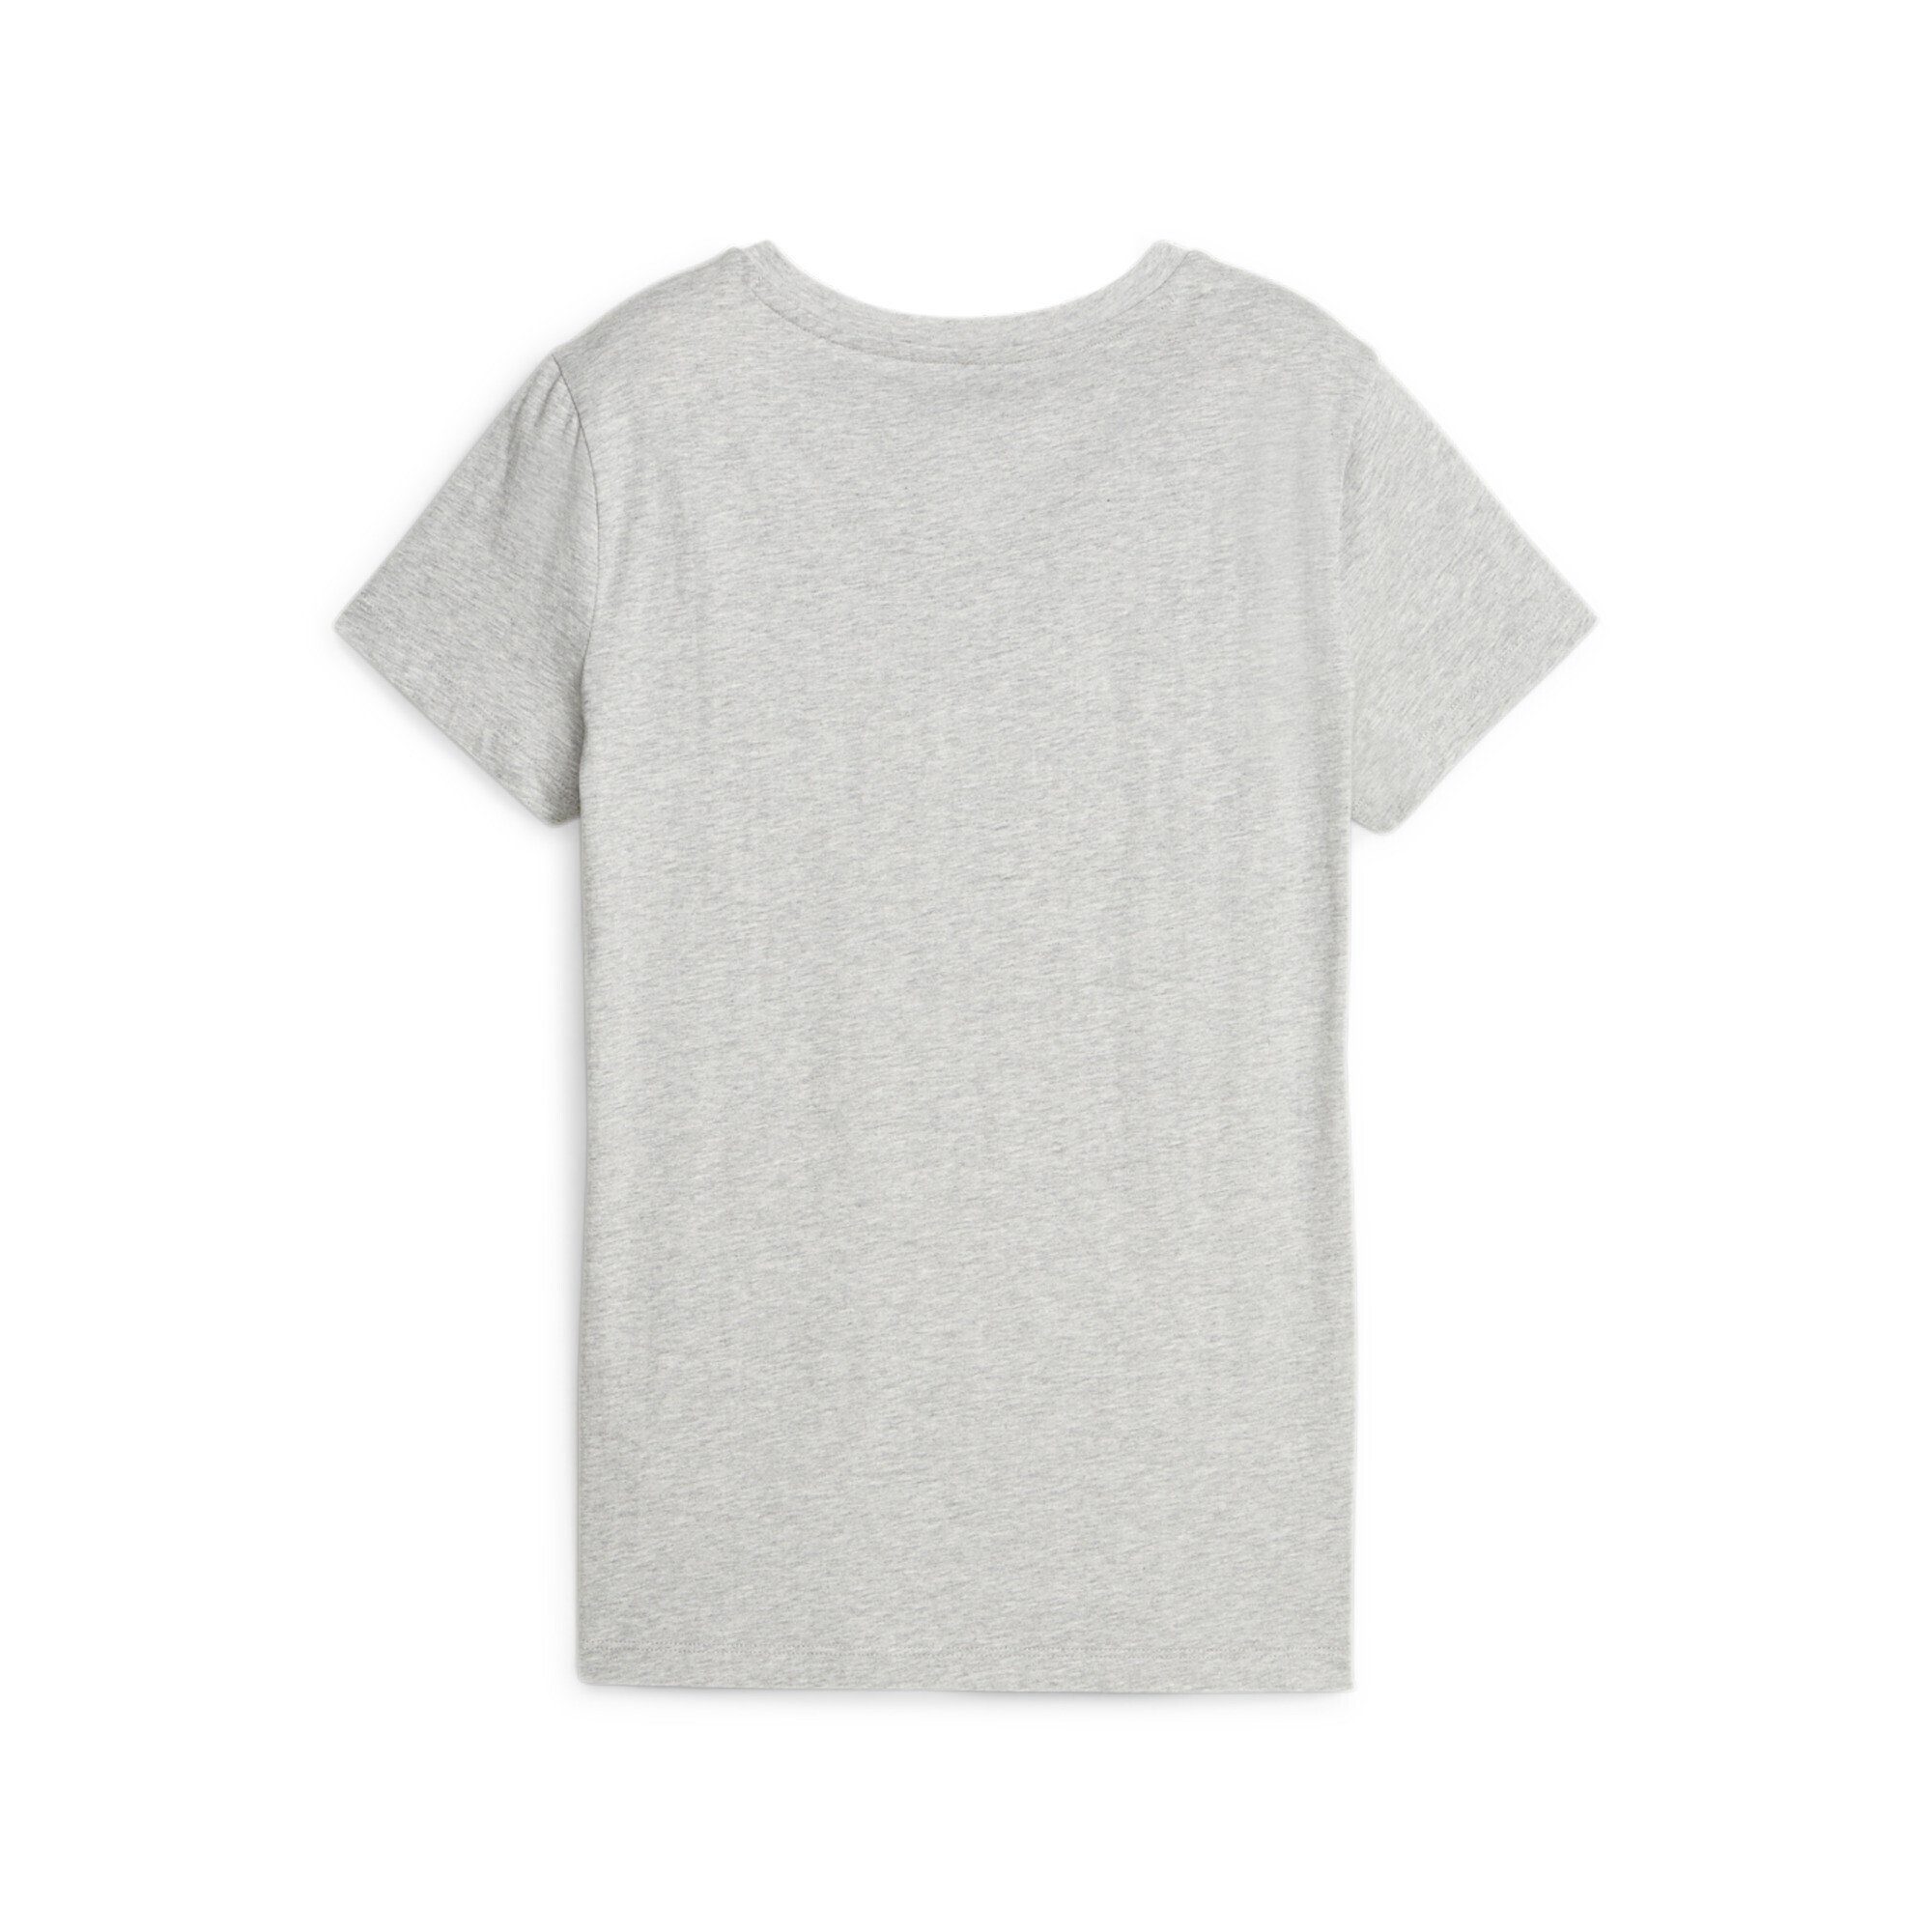 PUMA T-Shirt PUMA SQUAD Graphic Heather Gray T-Shirt Damen Light